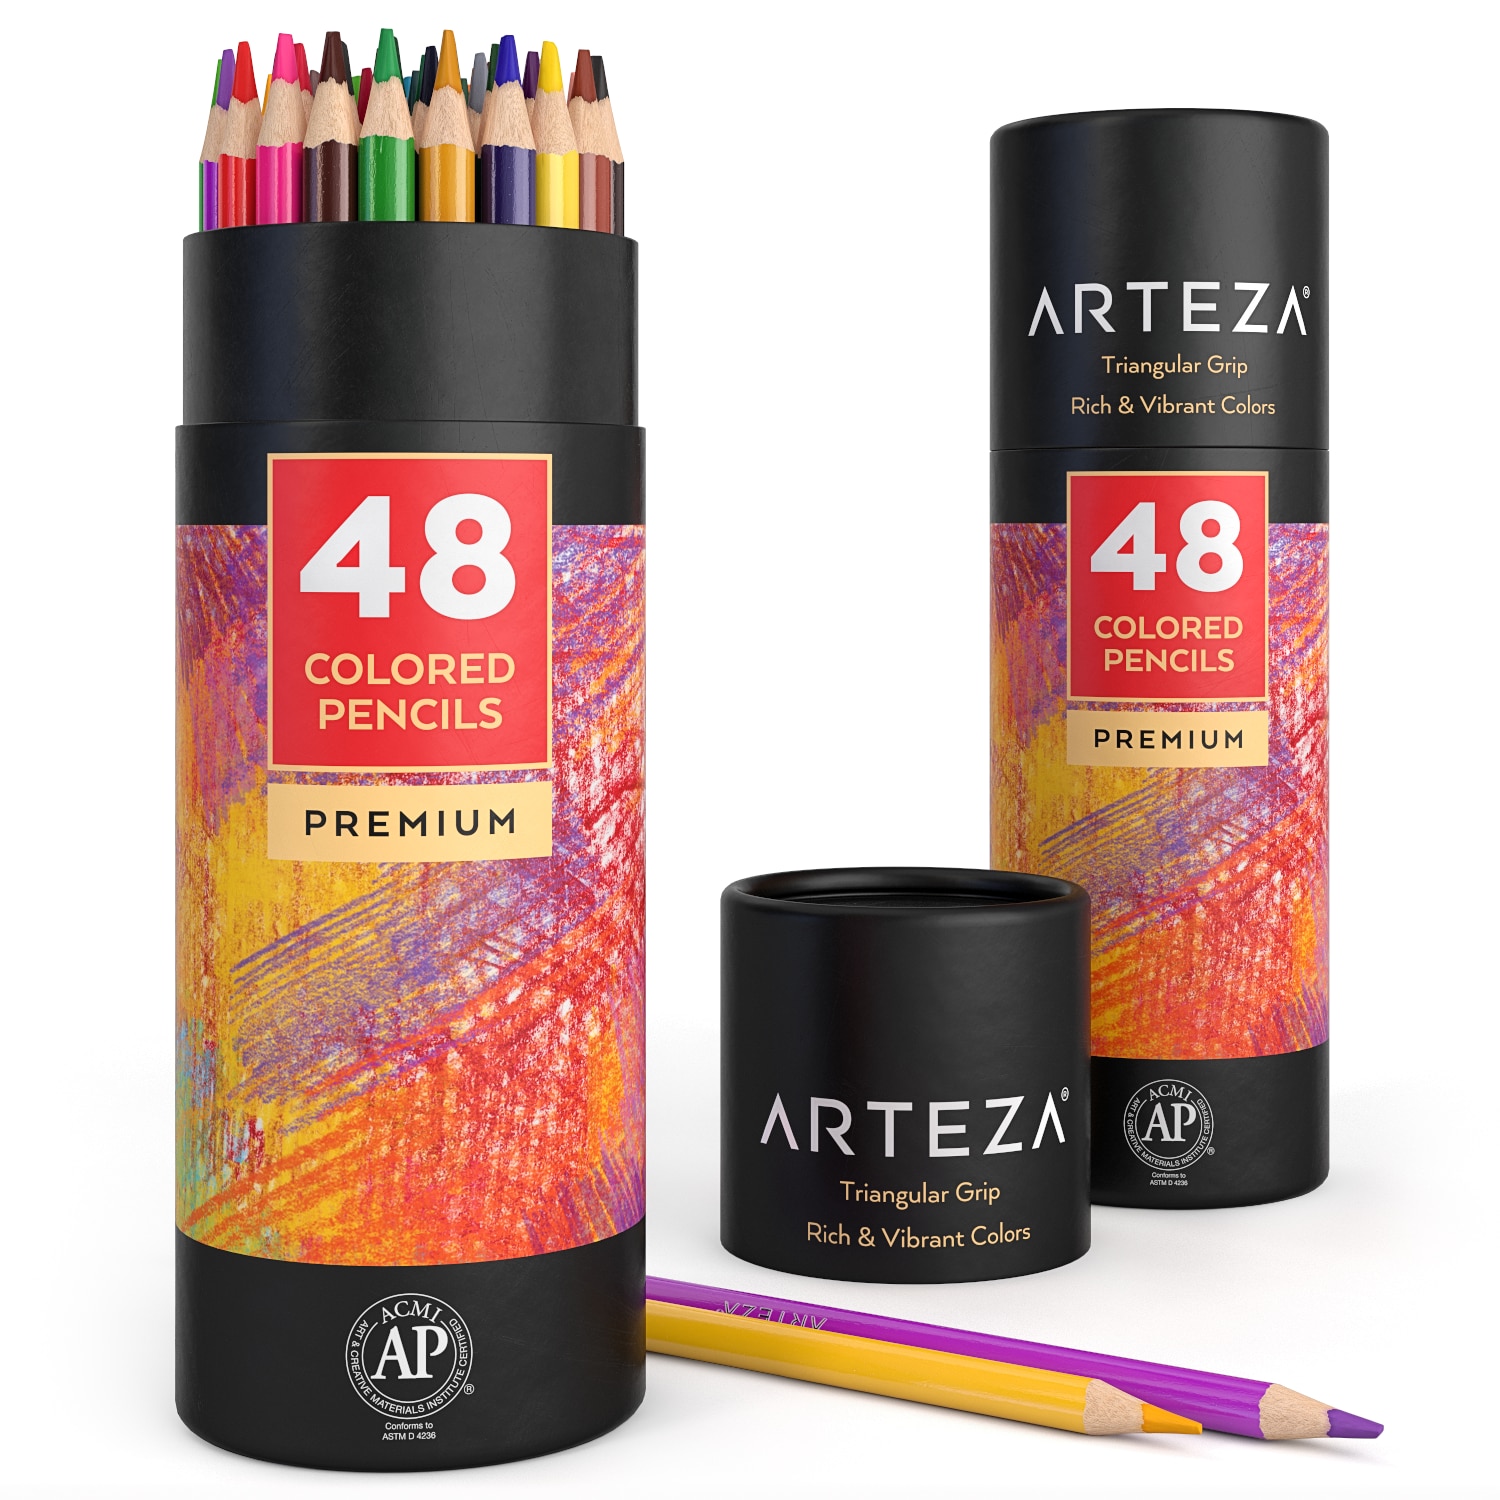 ARTEZA Arteza Colored Pencils, Triangle-shaped, Assorted Colors